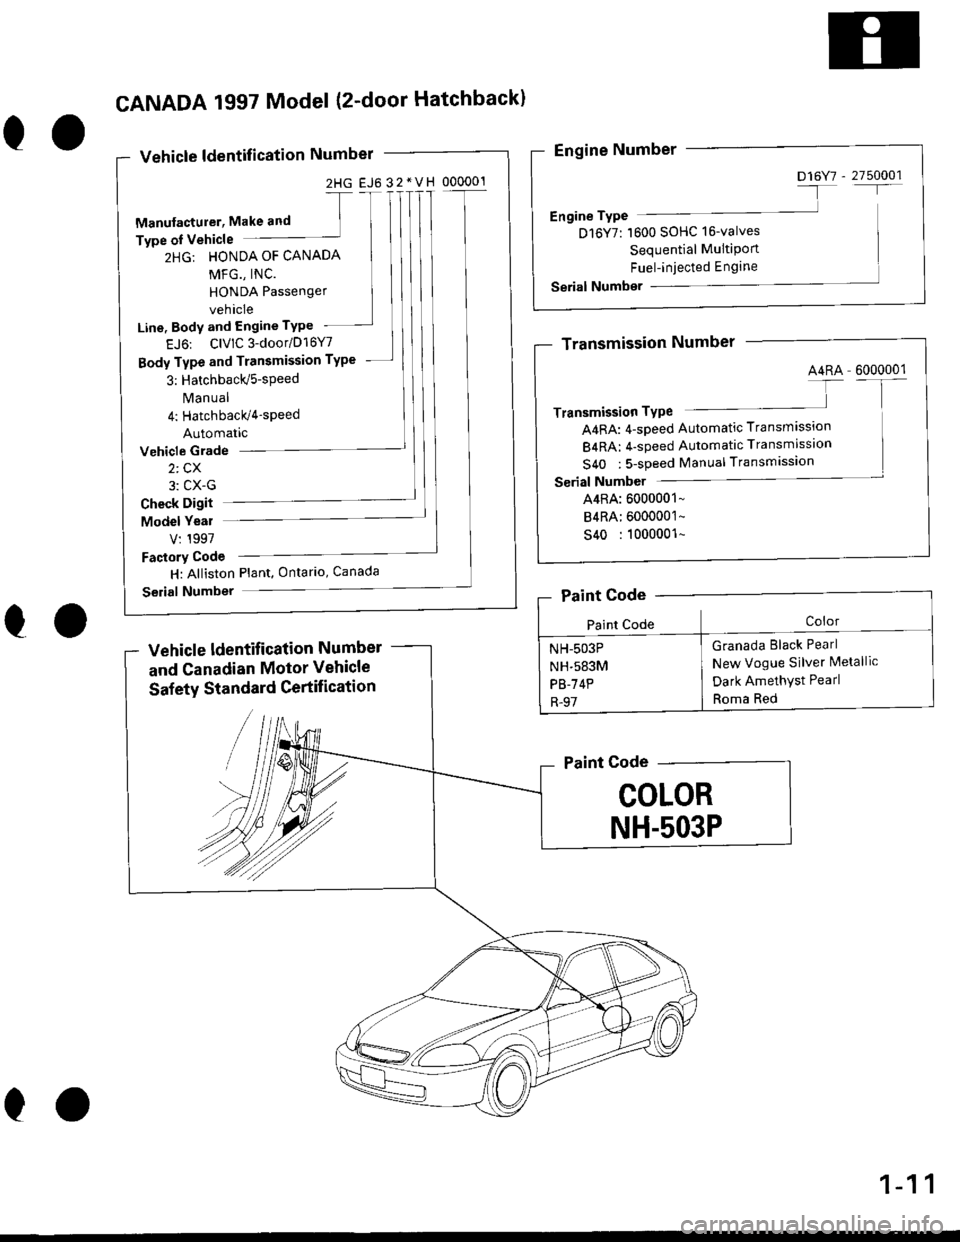 HONDA CIVIC 1996 6.G User Guide 2HG EJ6 32*VH 000001
eo
CANADA 1997 Model (2-door Hatchbackl
Vehicle ldentification Number
-[
Manufacturer, Make and ]Type oI Vehicle
2HG: HONDA OF CANADA
MFG., INC.
HONDA Passenger
vehicle
Line, Body